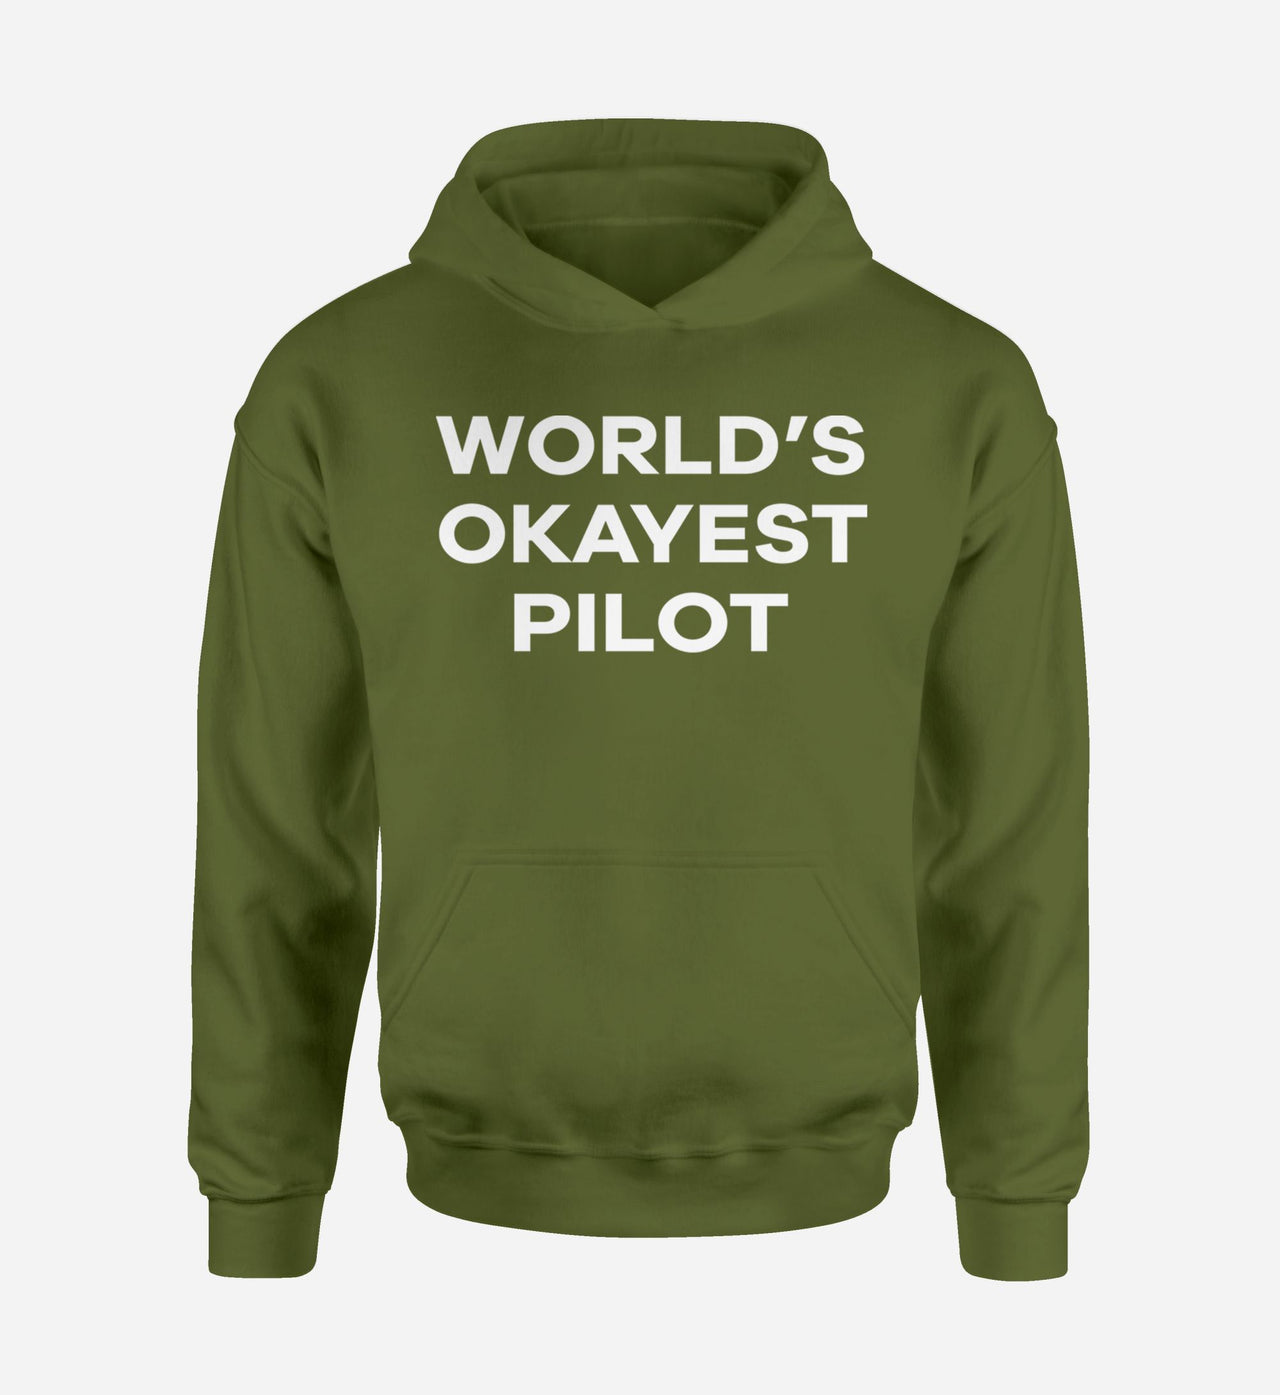 World's Okayest Pilot Designed Hoodies